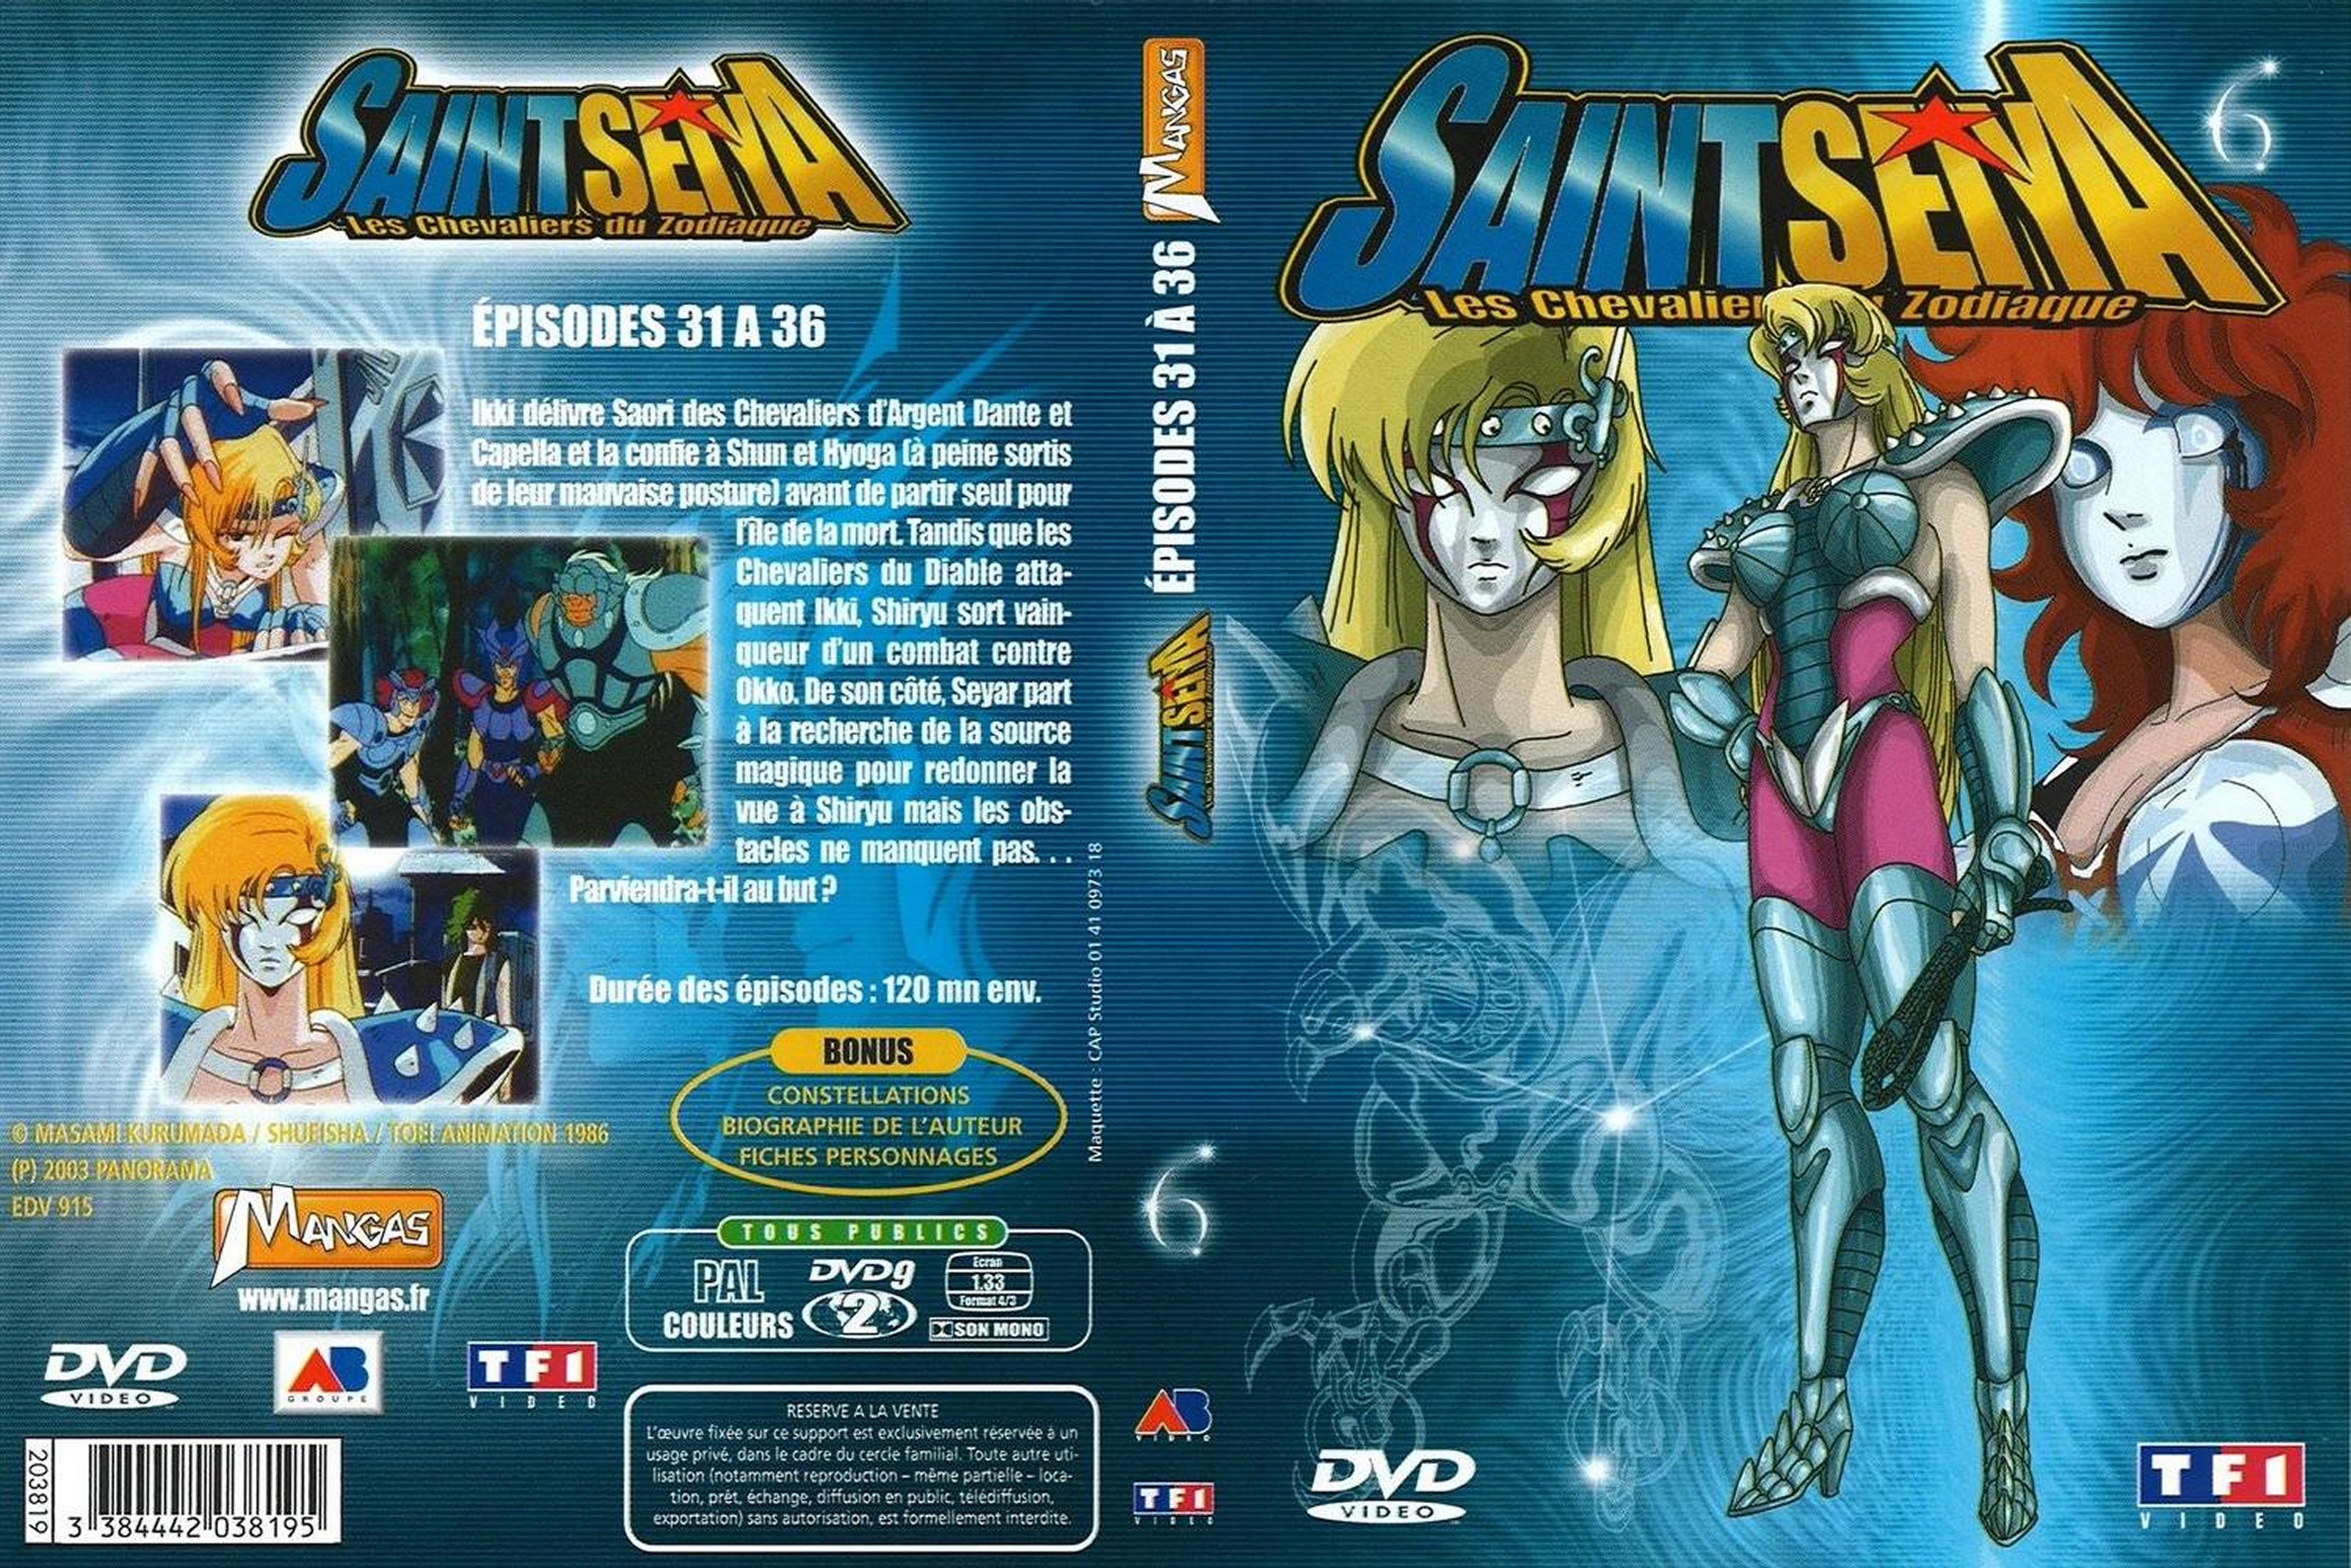 Jaquette DVD Saint Seiya vol 06